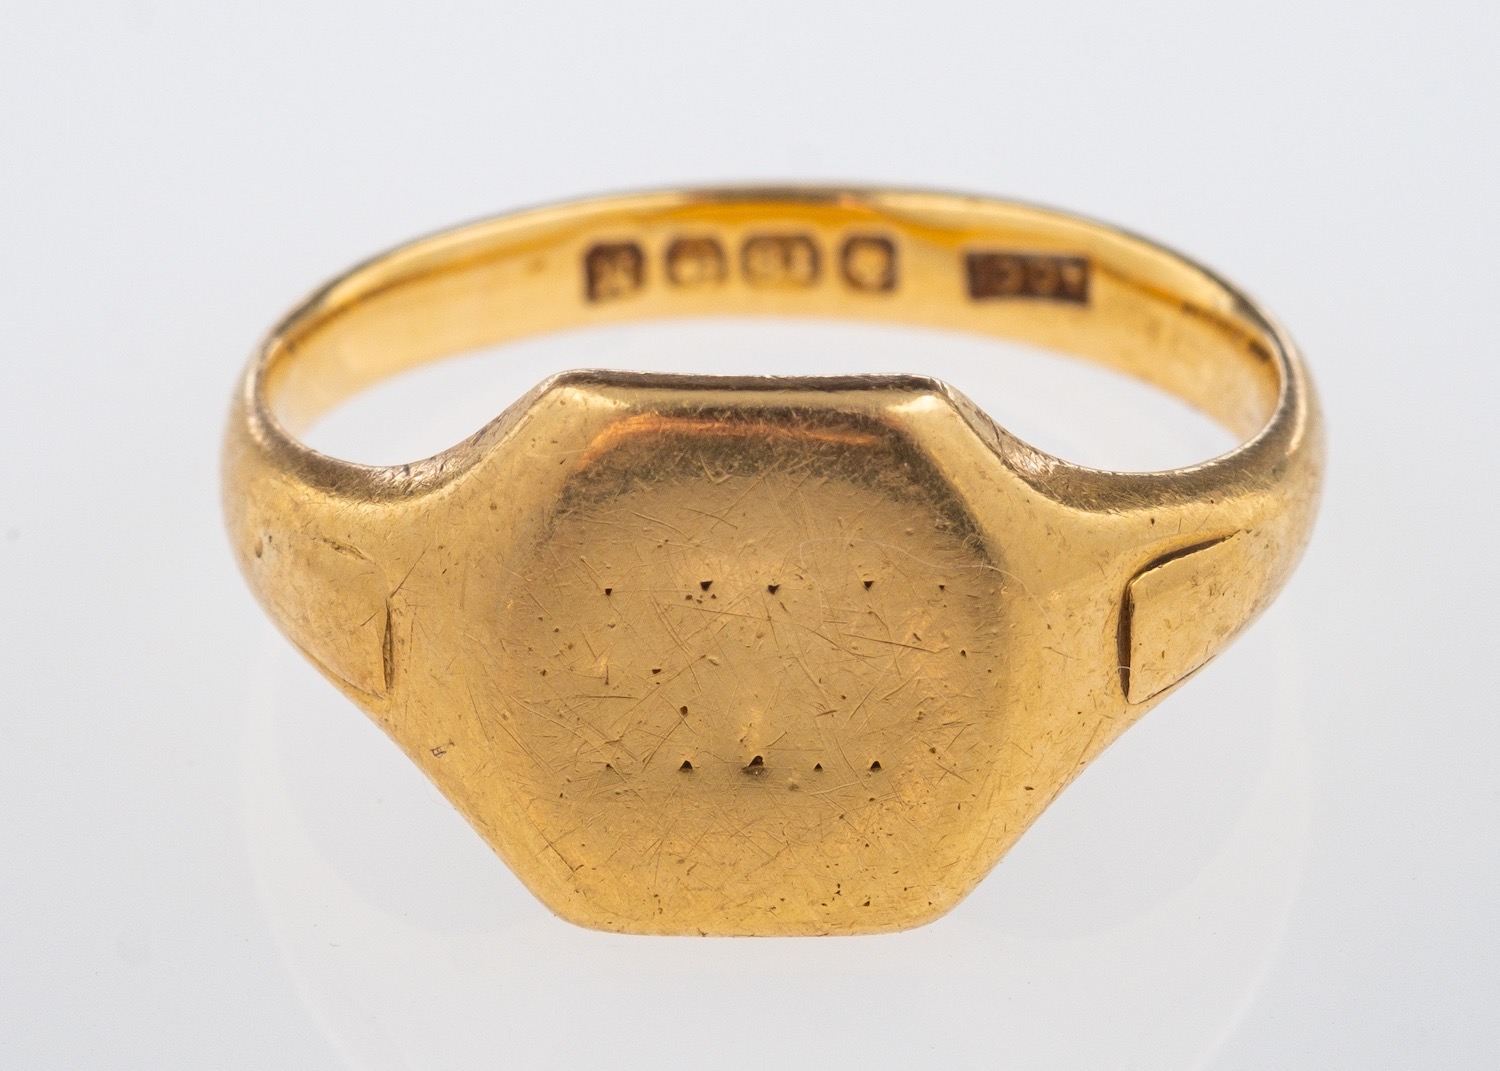 A gold ring signet ring, hallmarked 18ct, Birmingham 1936, weight 7.